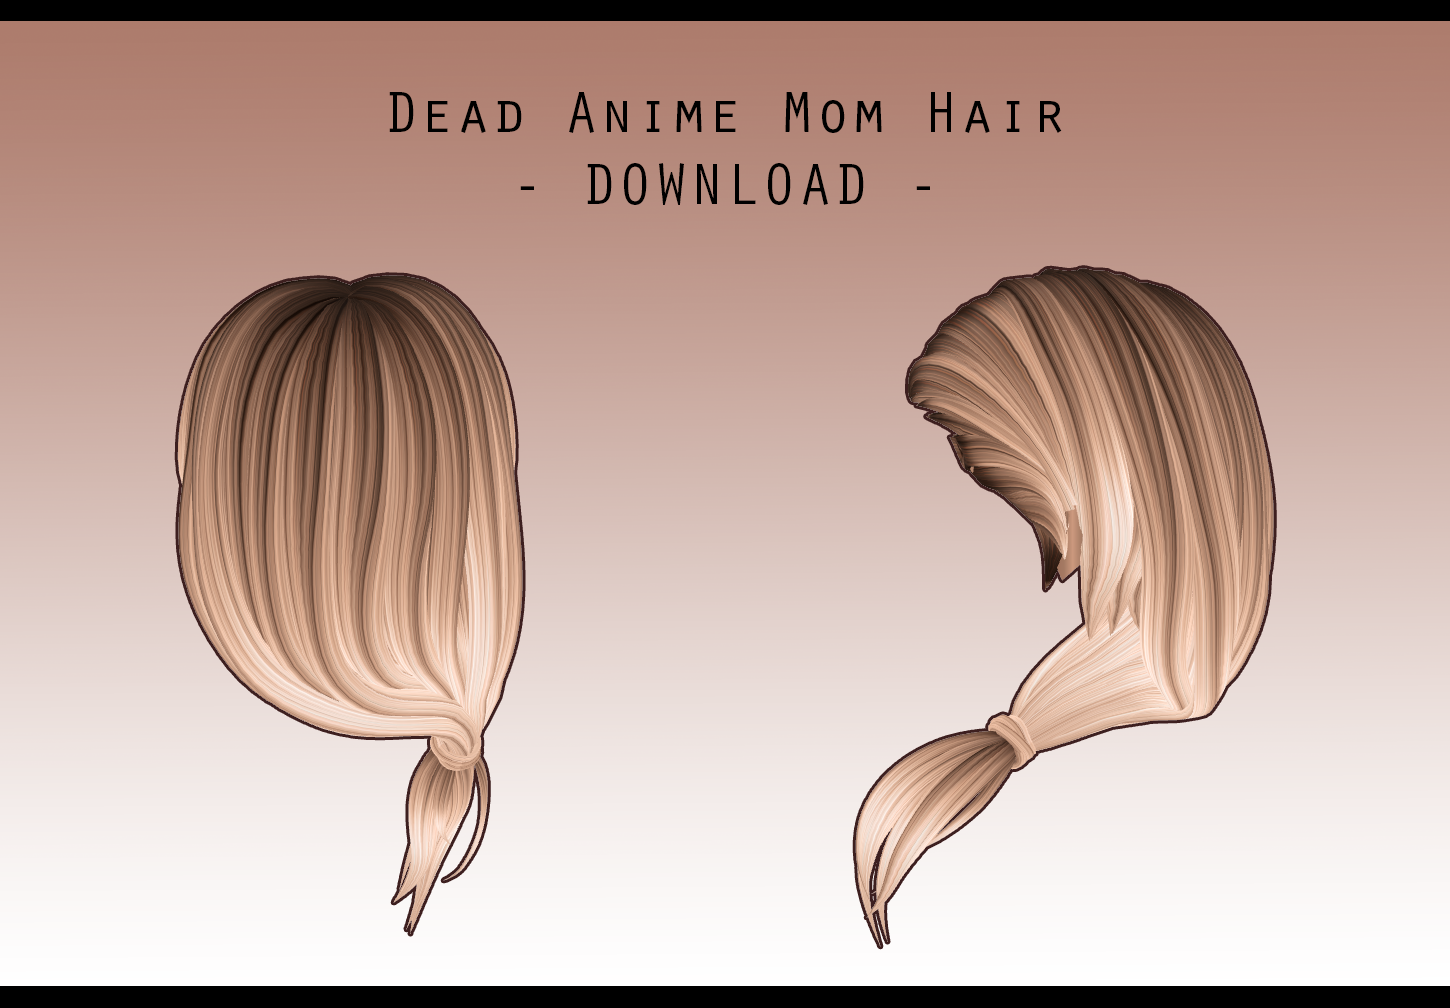 Anime Mom Hairstyle of Death | TikTok